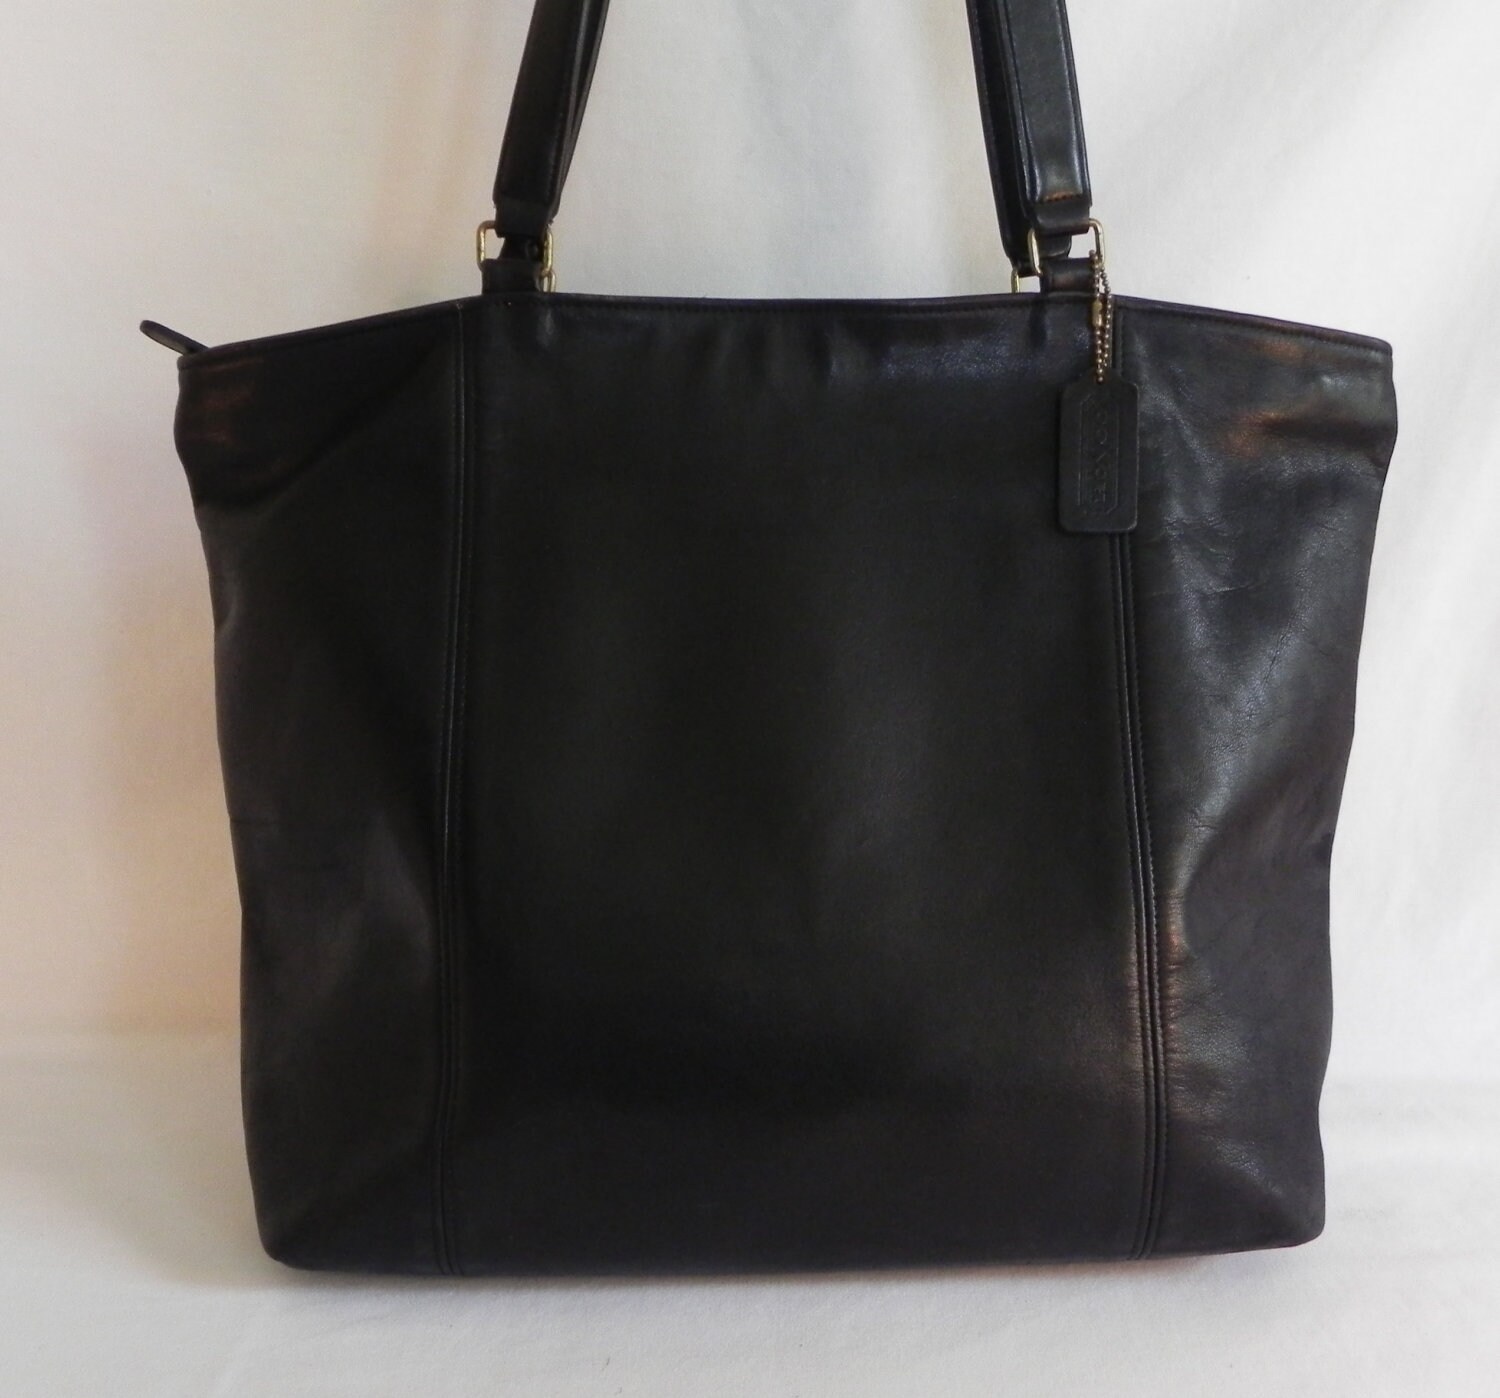 Vintage Black Leather Coach Tote Bag Diaper Bag Large Carryall